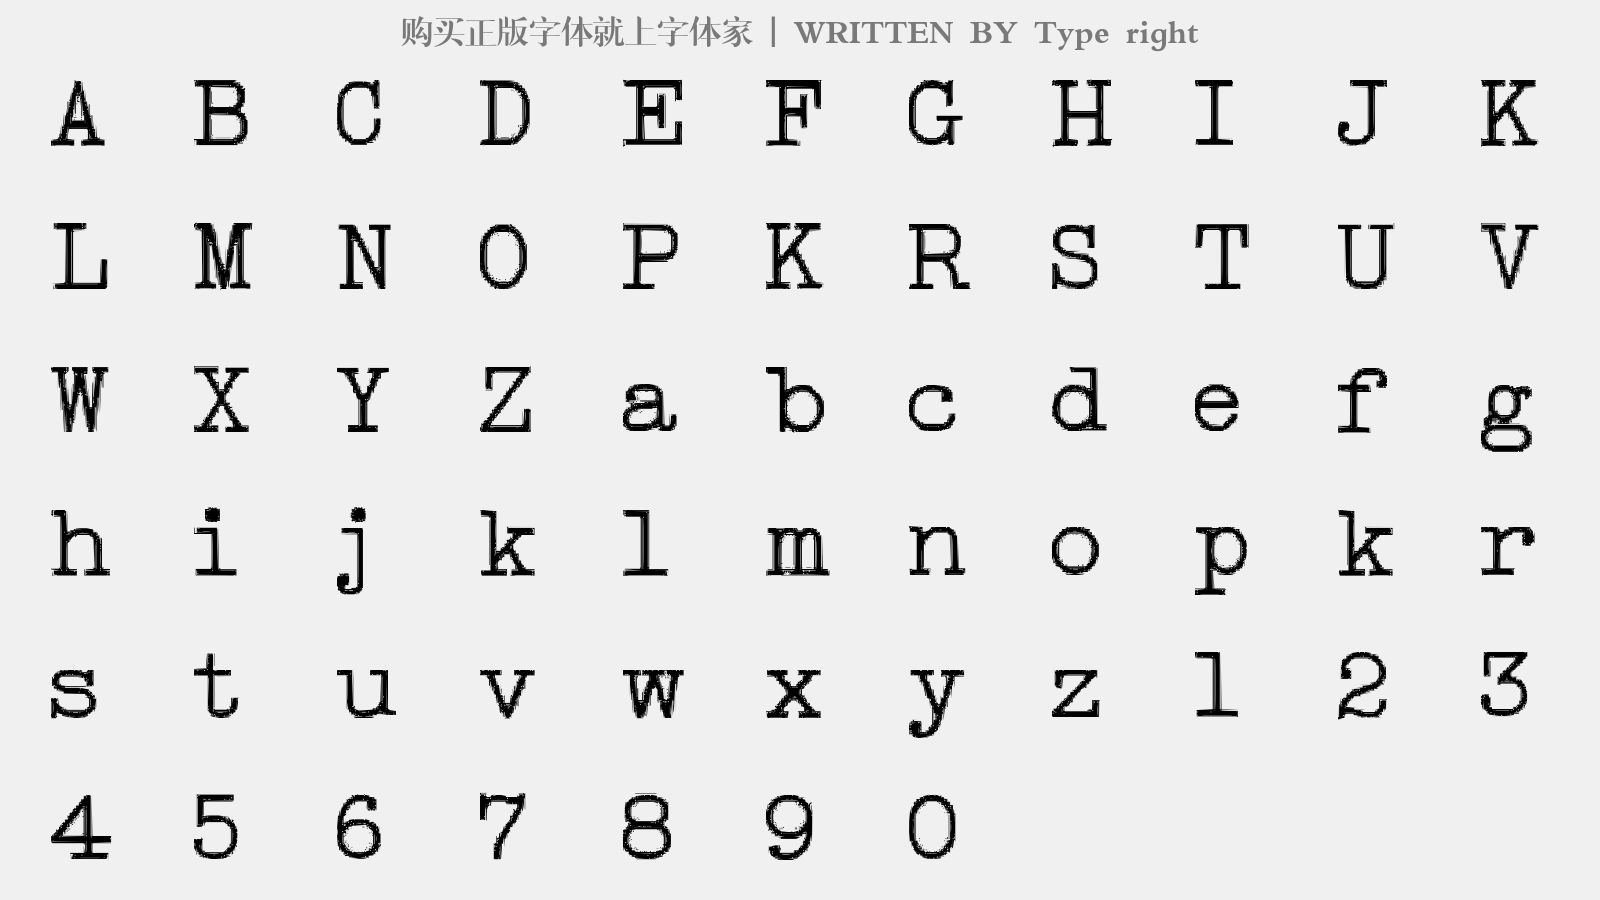 Type right - 大写字母/小写字母/数字